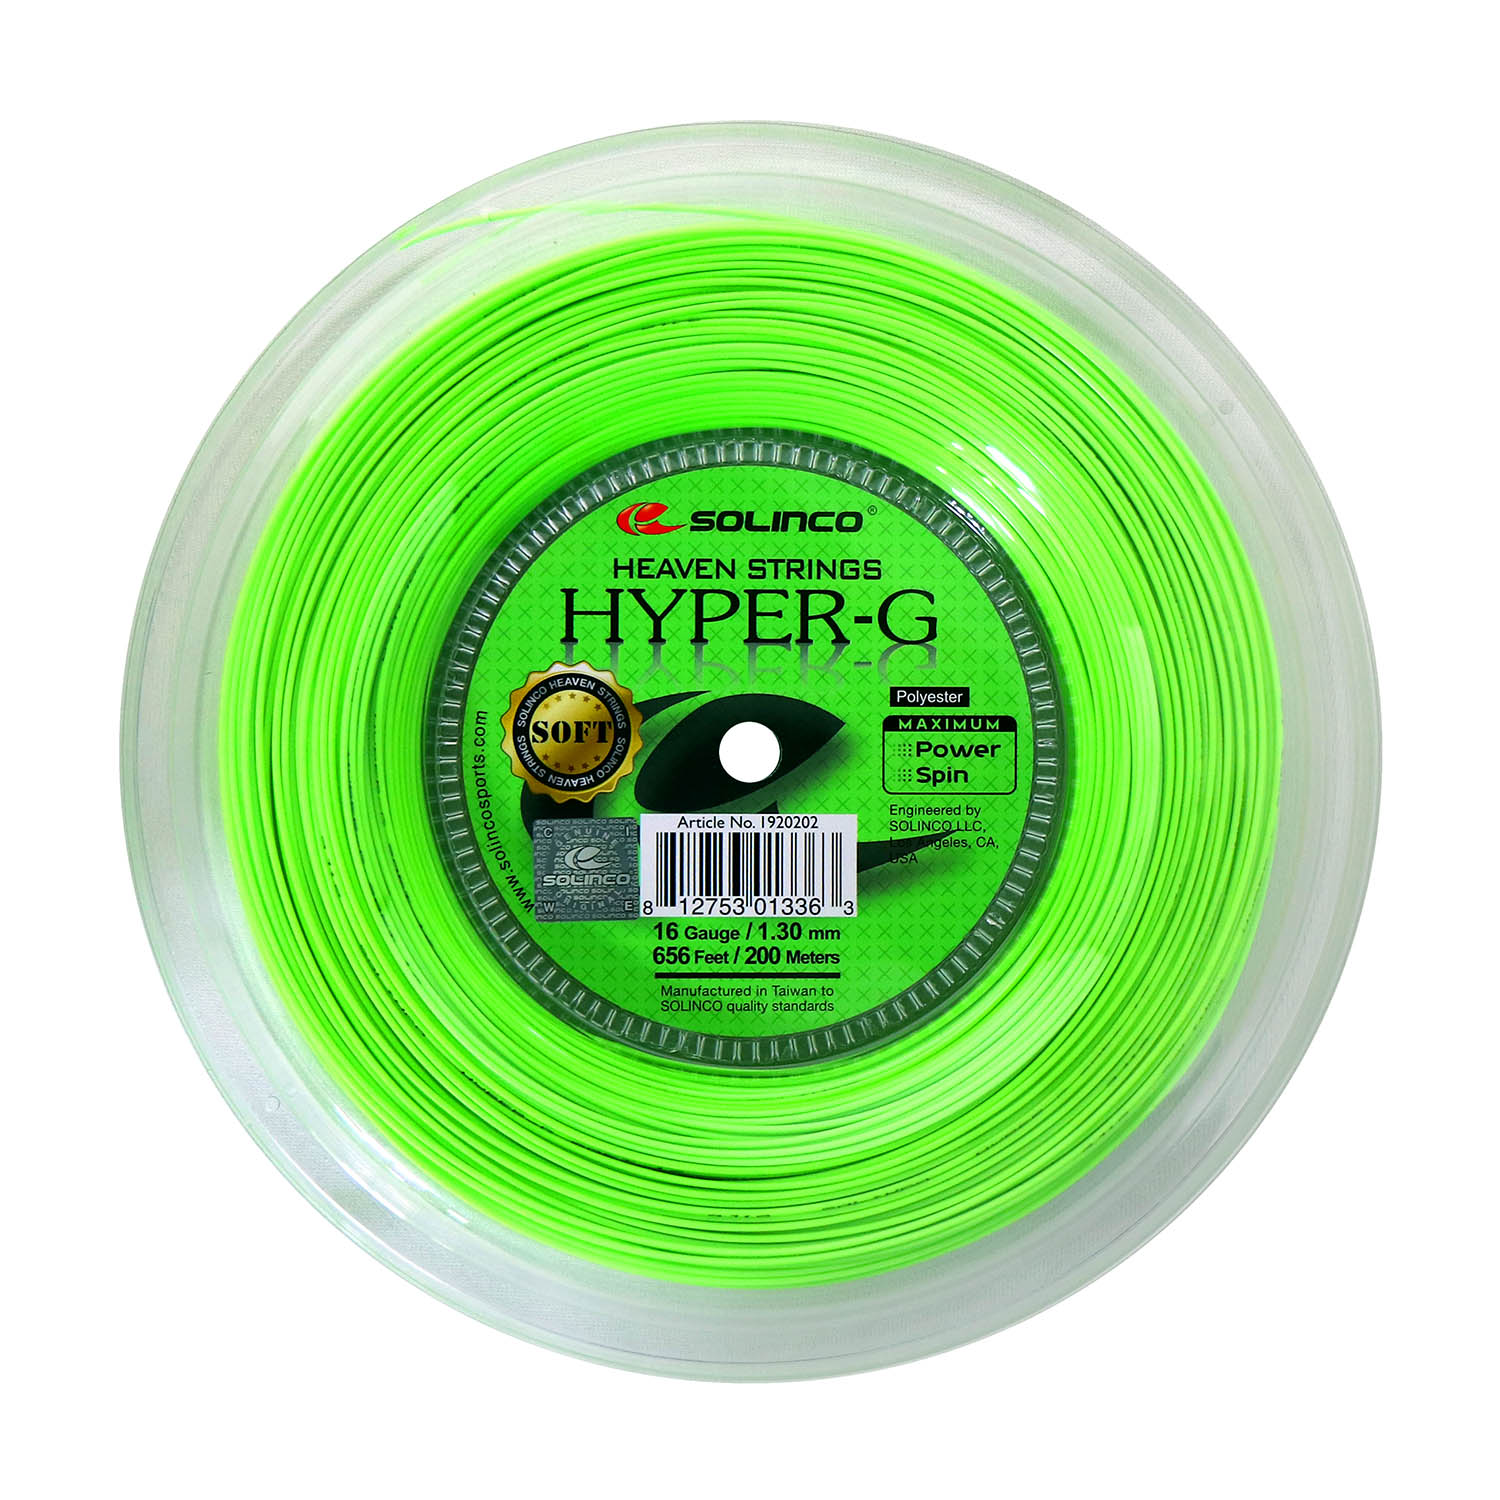 Solinco Hyper G Soft 1.30 200 m Reel - Green